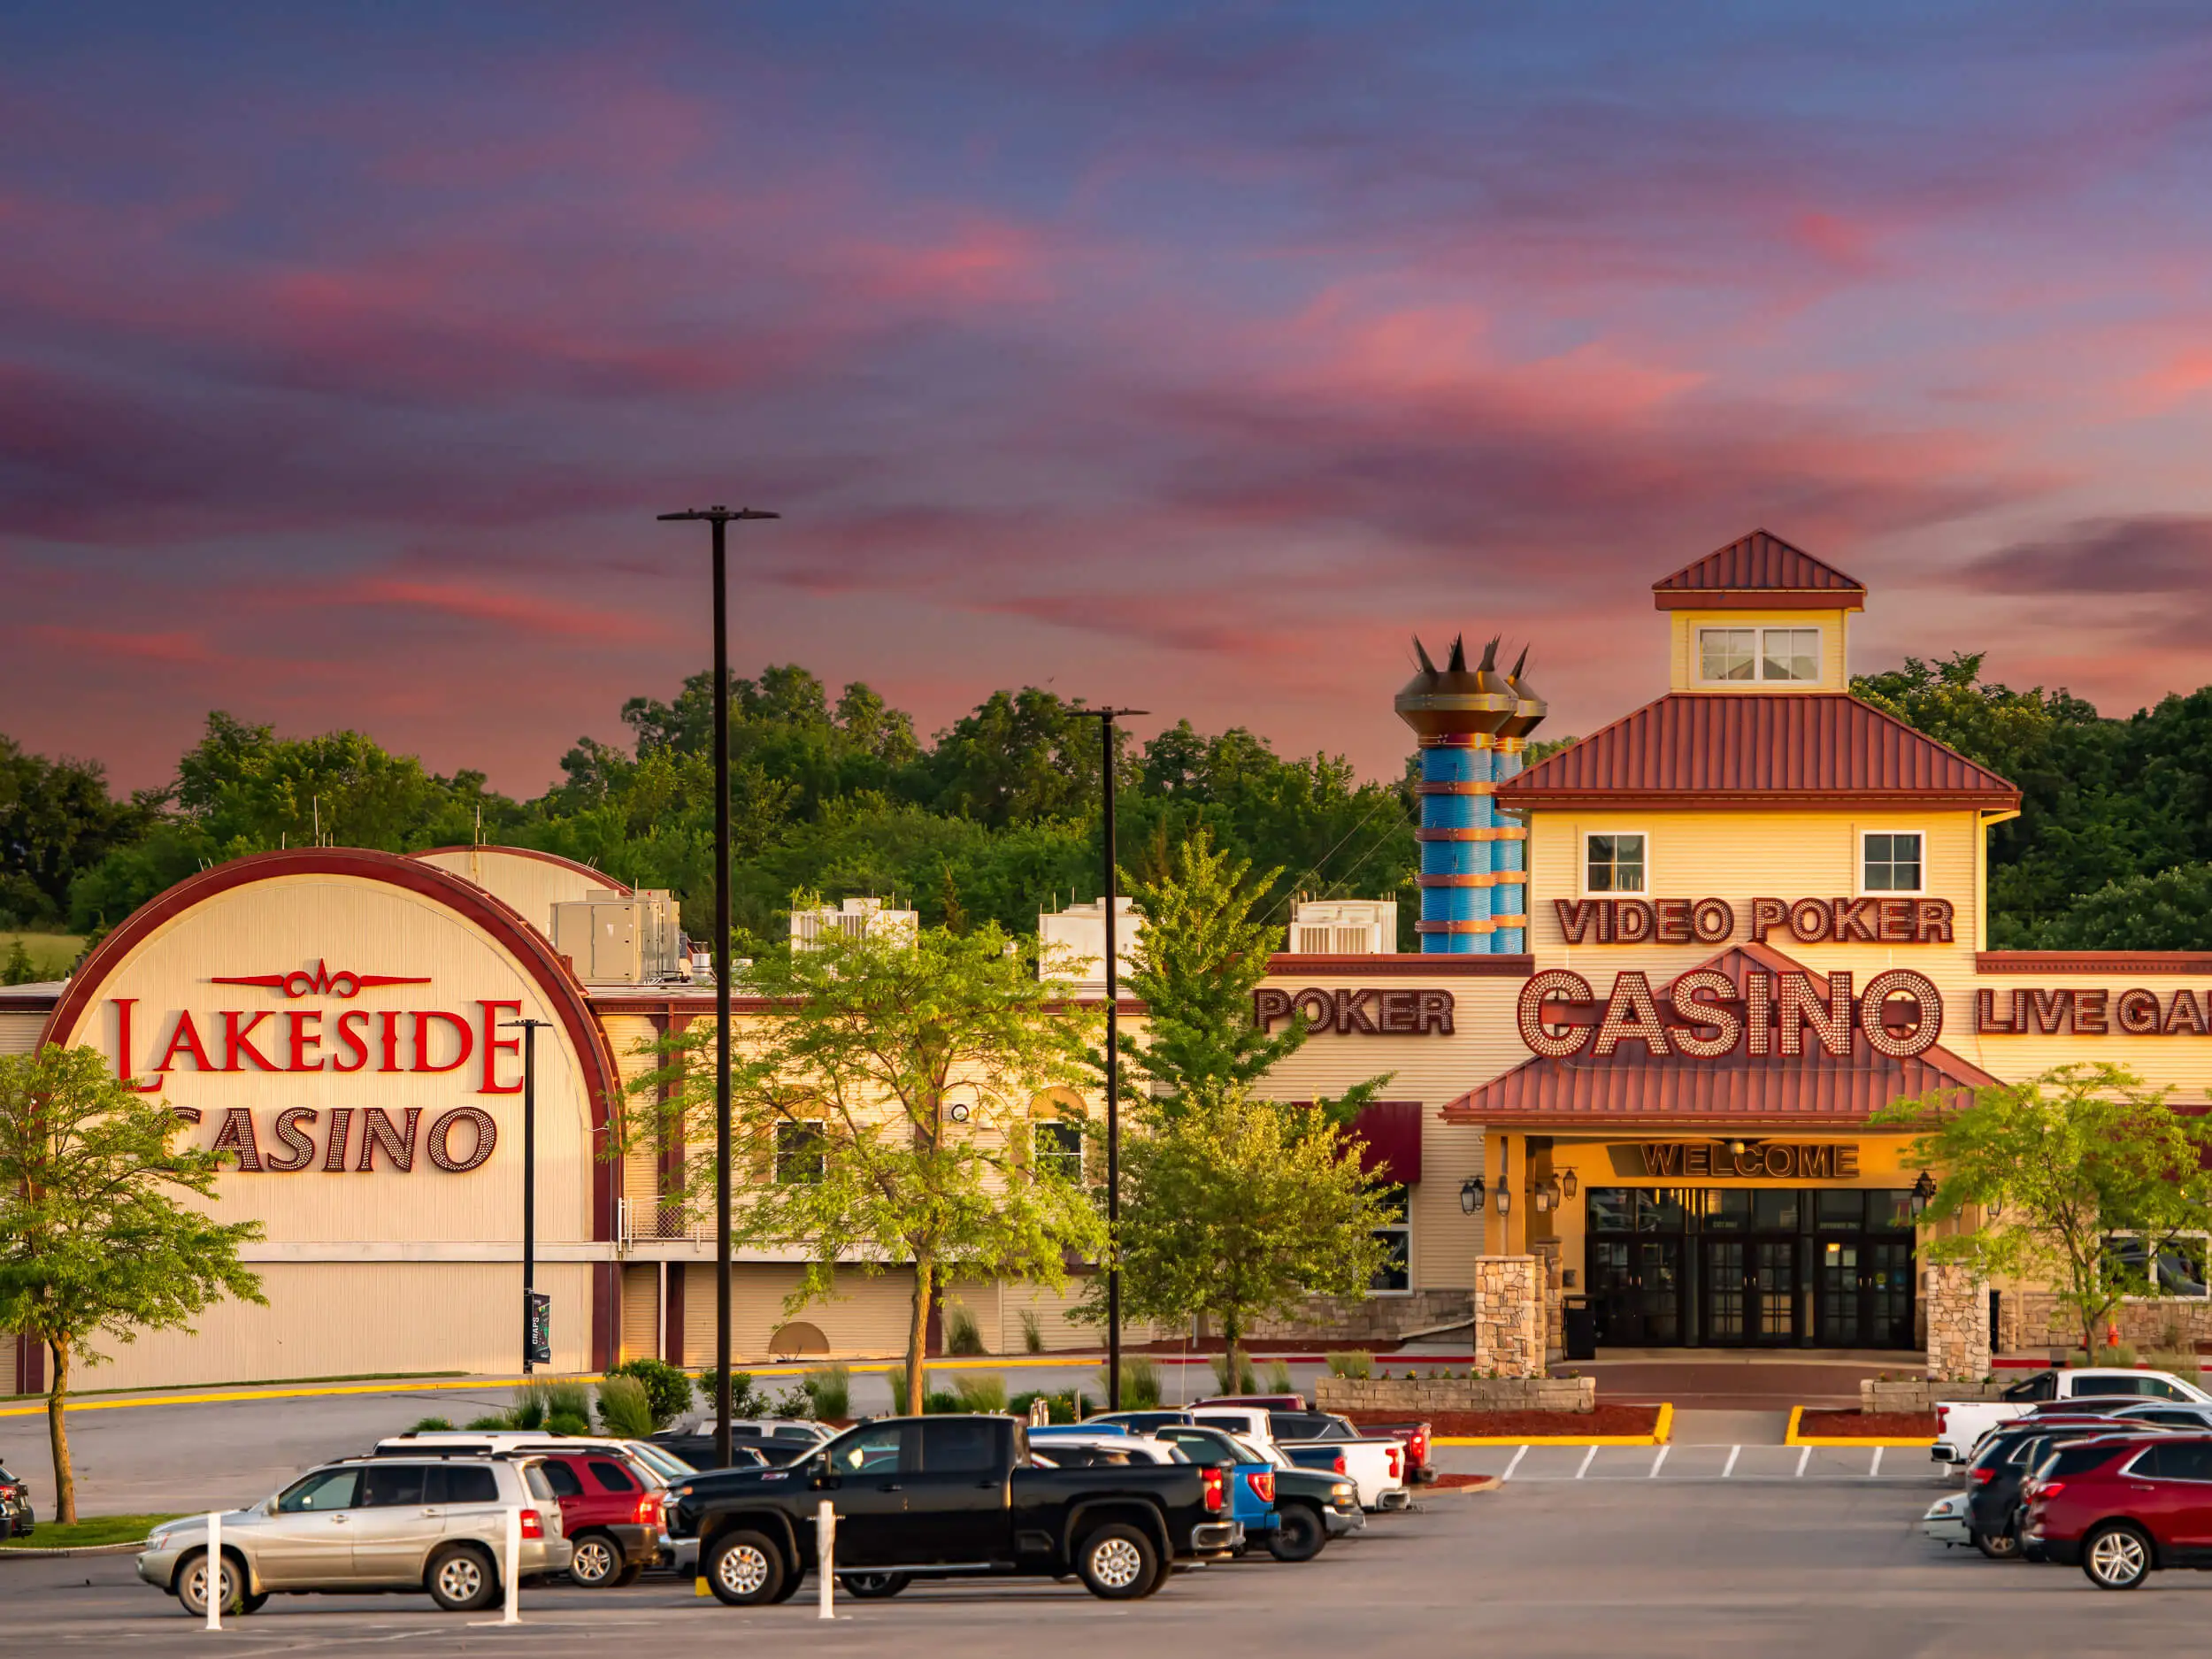 Lakeside Casino Parking View